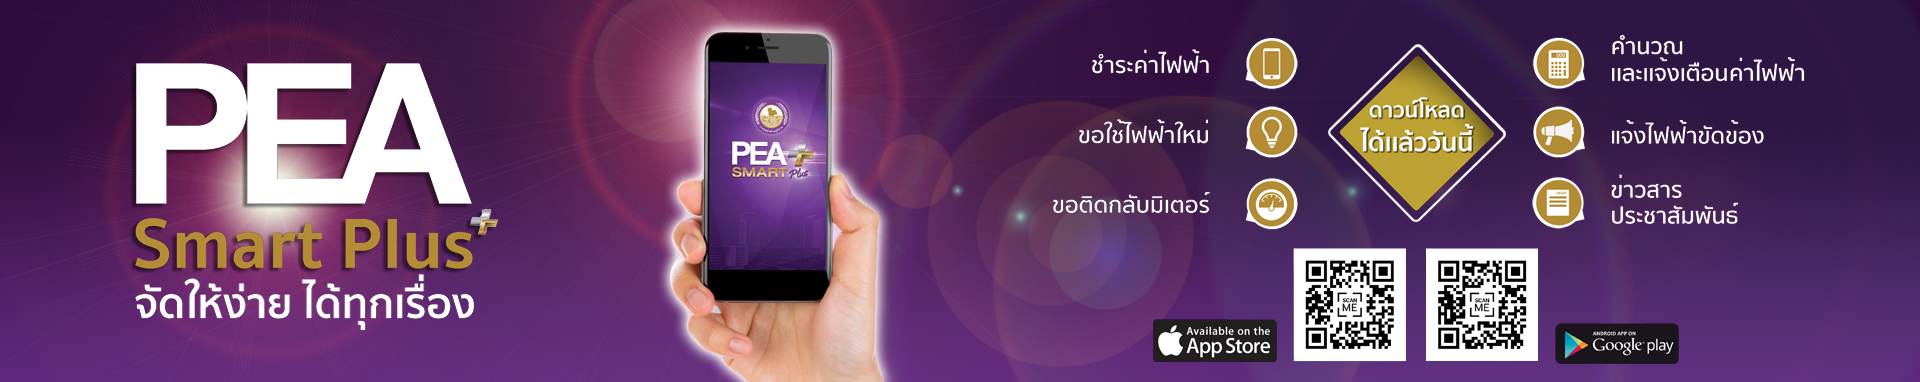 PEA Mobile Application